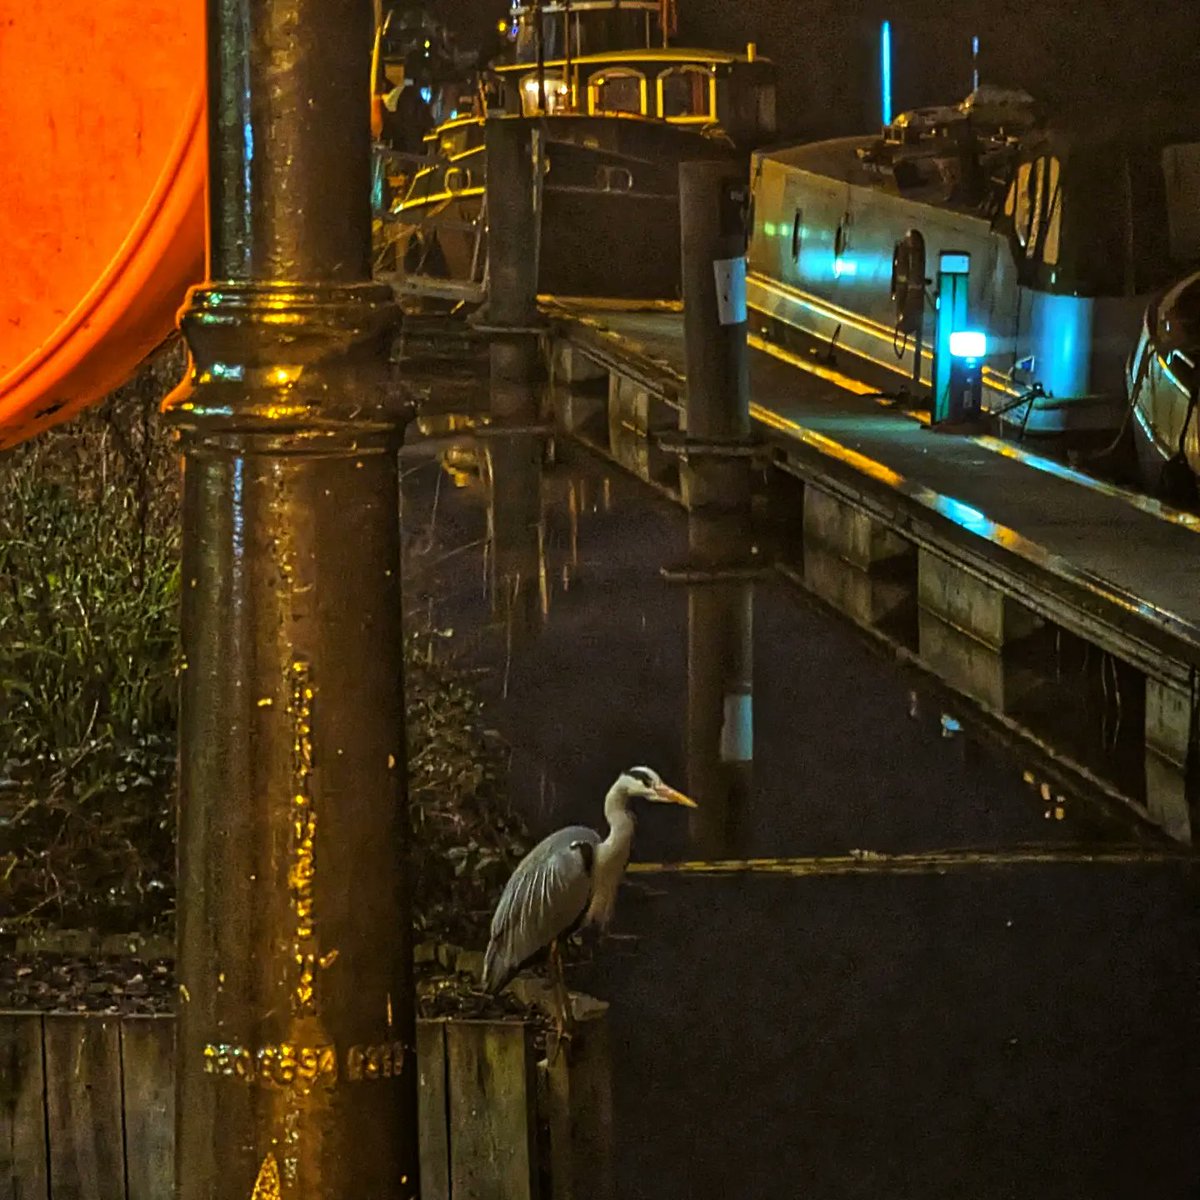 Grey Heron 🤍
@ThePhotoHour @bbcweather @metoffice #greyheron #heron #BirdsSeenIn2023 #BirdsOfTwitter #birds #uk #photooftheday #PHOTOS #mobilephotography #OnePlus #WINTER #prey #ukbirds #NightPhotography